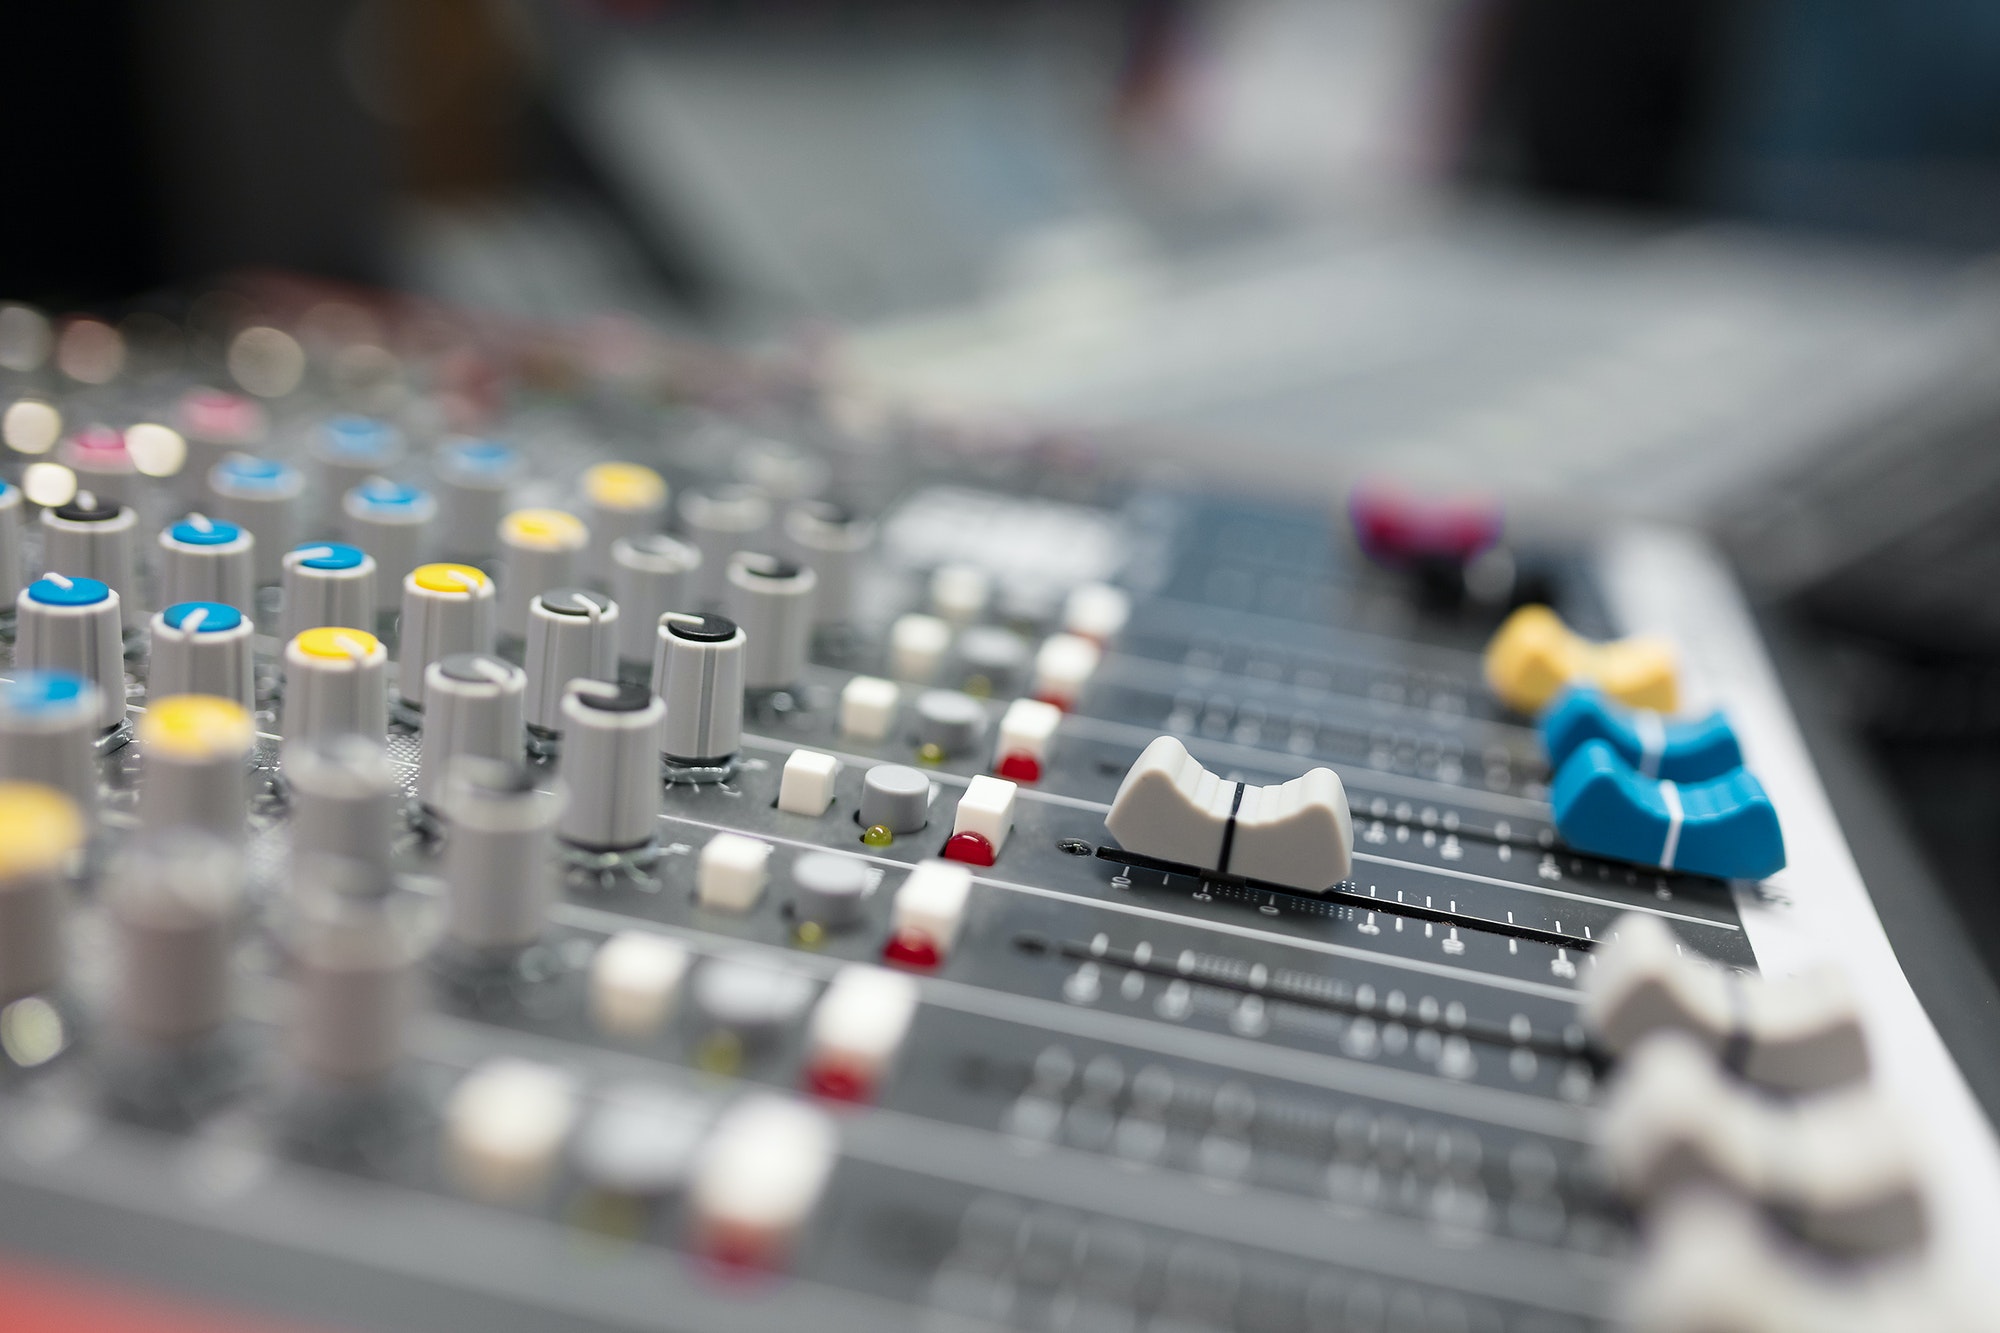 Sound mixer in radio broadcasting and music recording studio